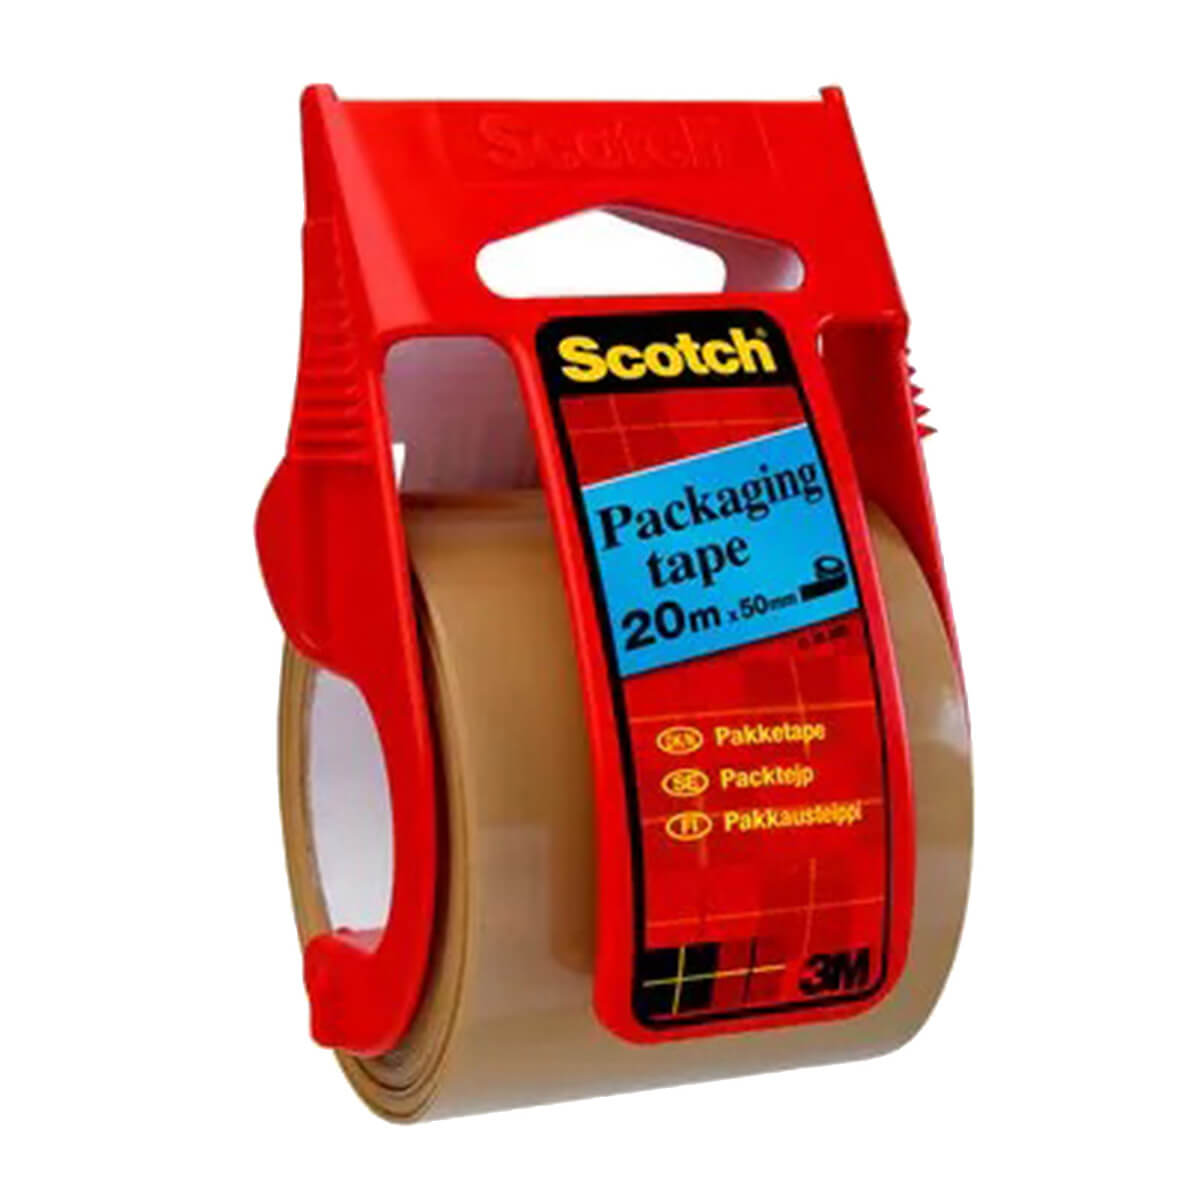 Scotch Packaging tape 50 mm x 20 m brown in hand dispenser Classic Parcel tape dispenser